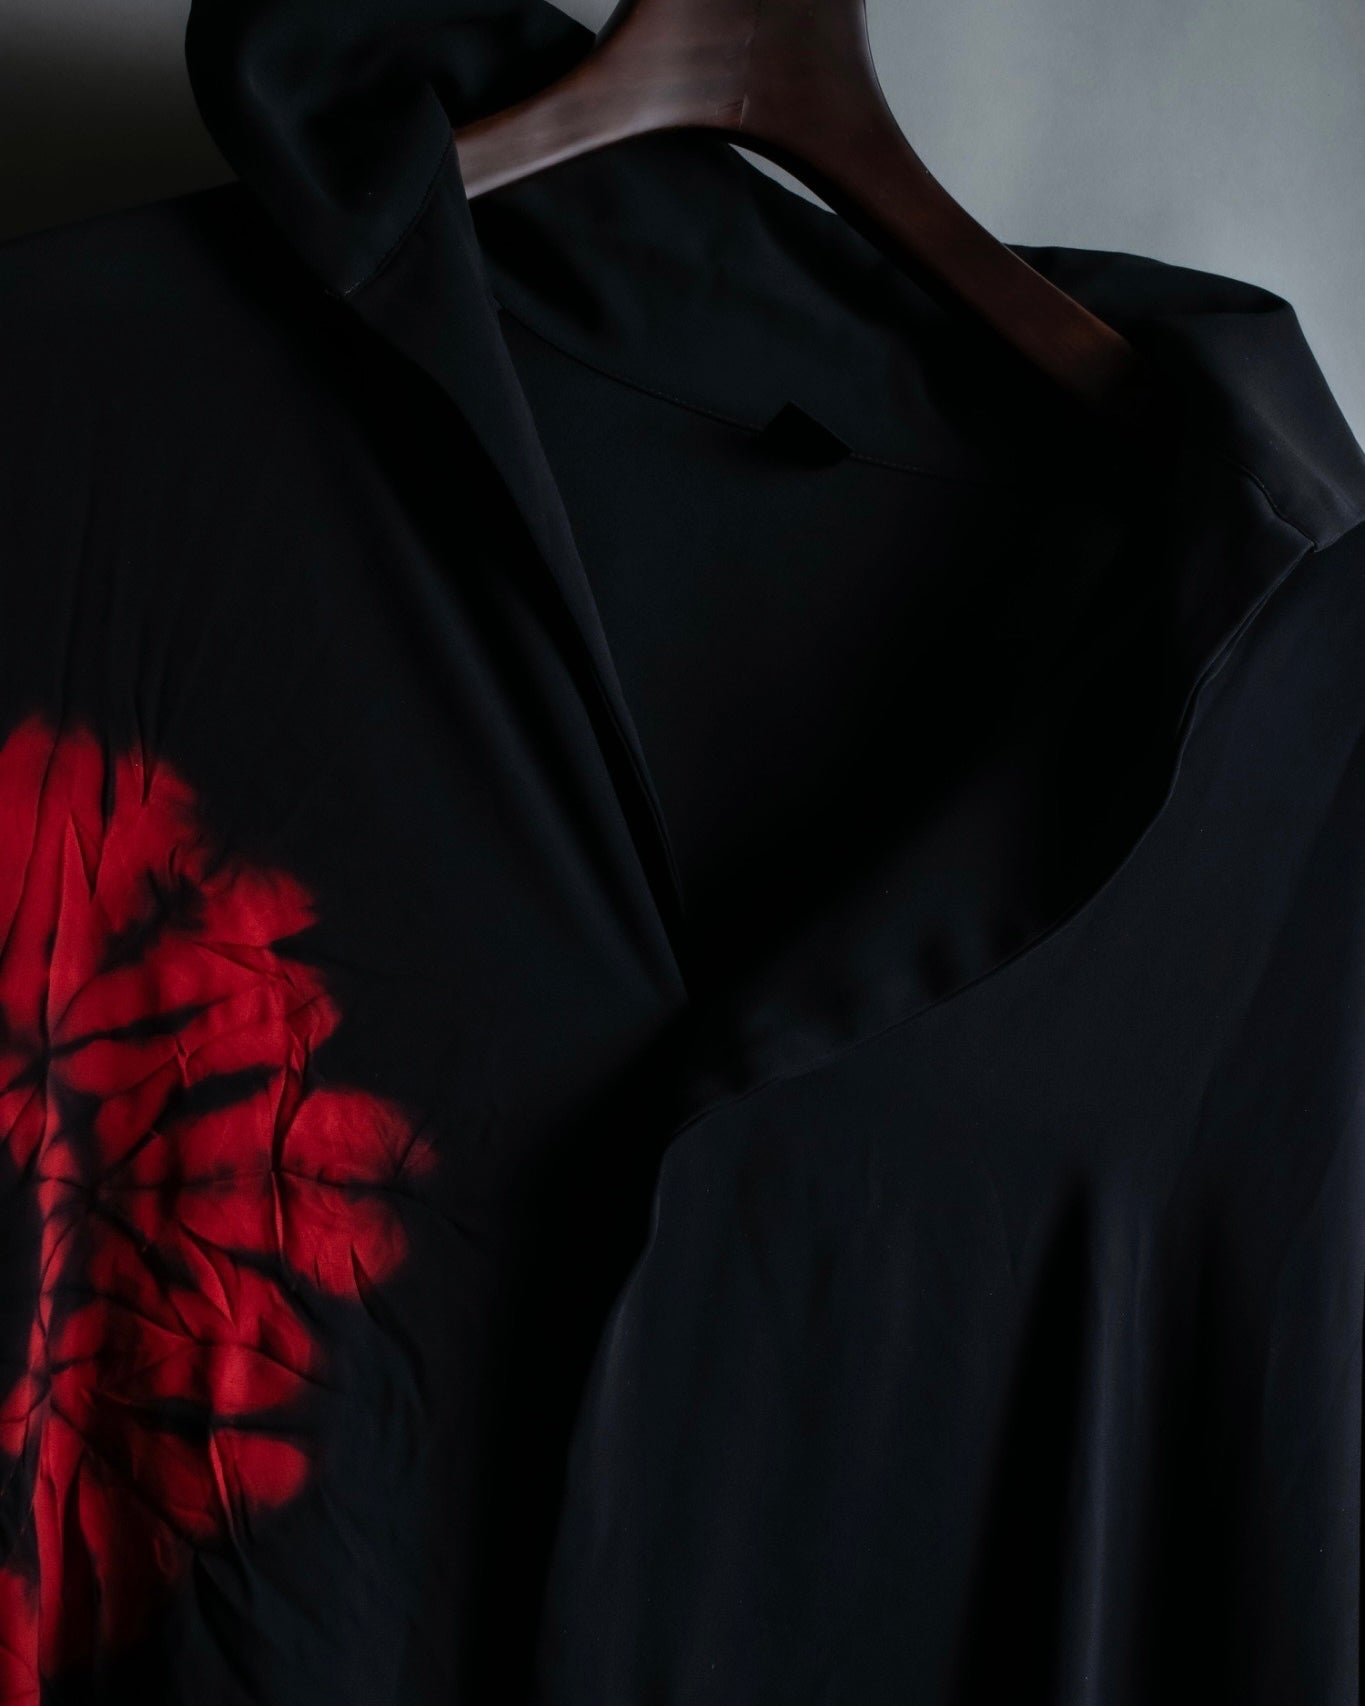 Y's 2018 PRE-SPRING COLLECTION

Oversized arrangement sheer shirt